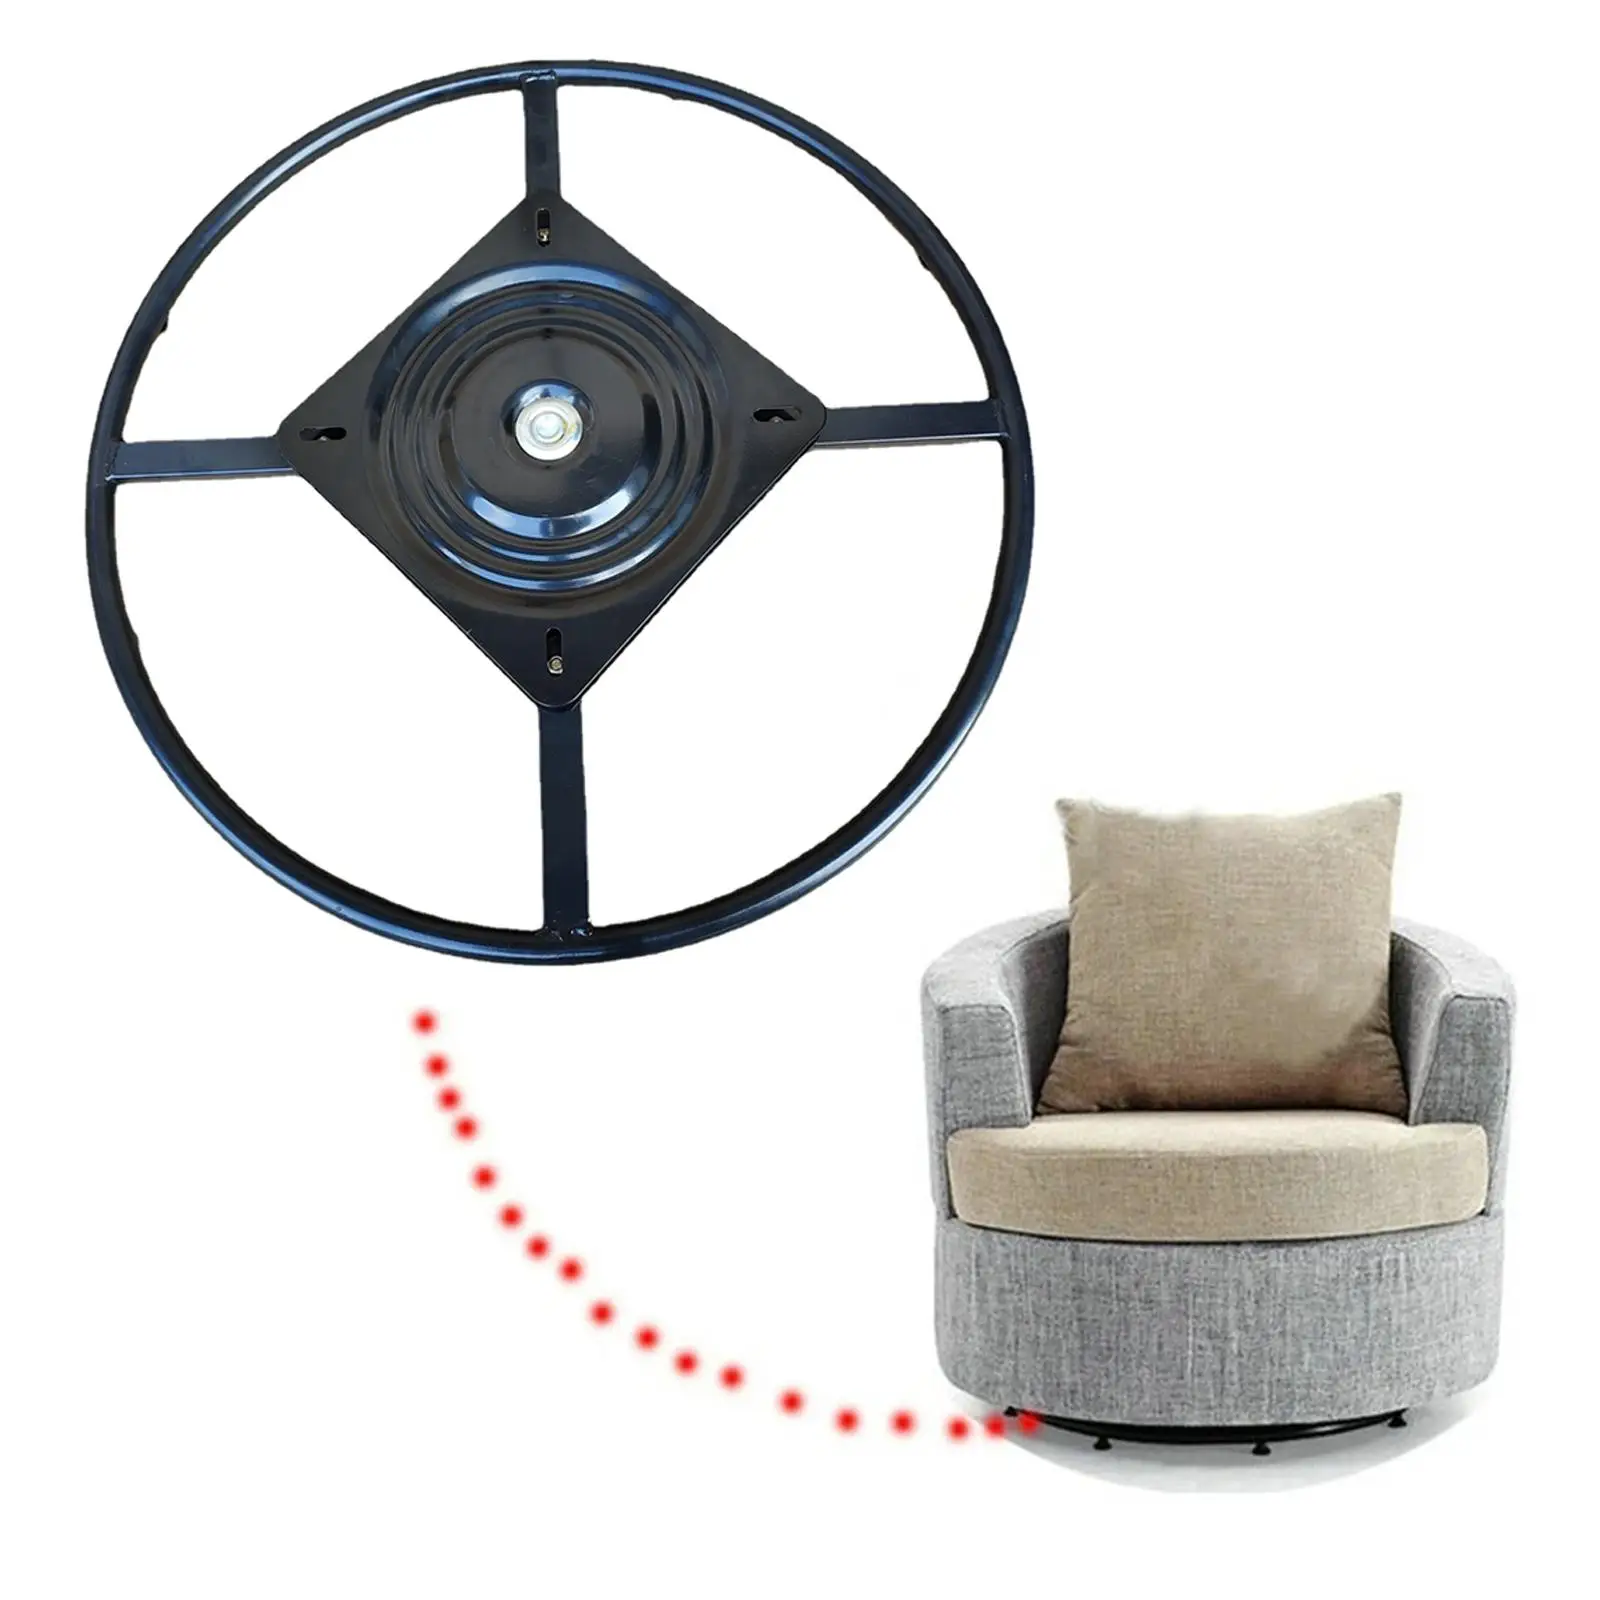 60cm recliner Sofa Chairs Base Bracket 360 Degree Rotate Hinge Hardware Accessory